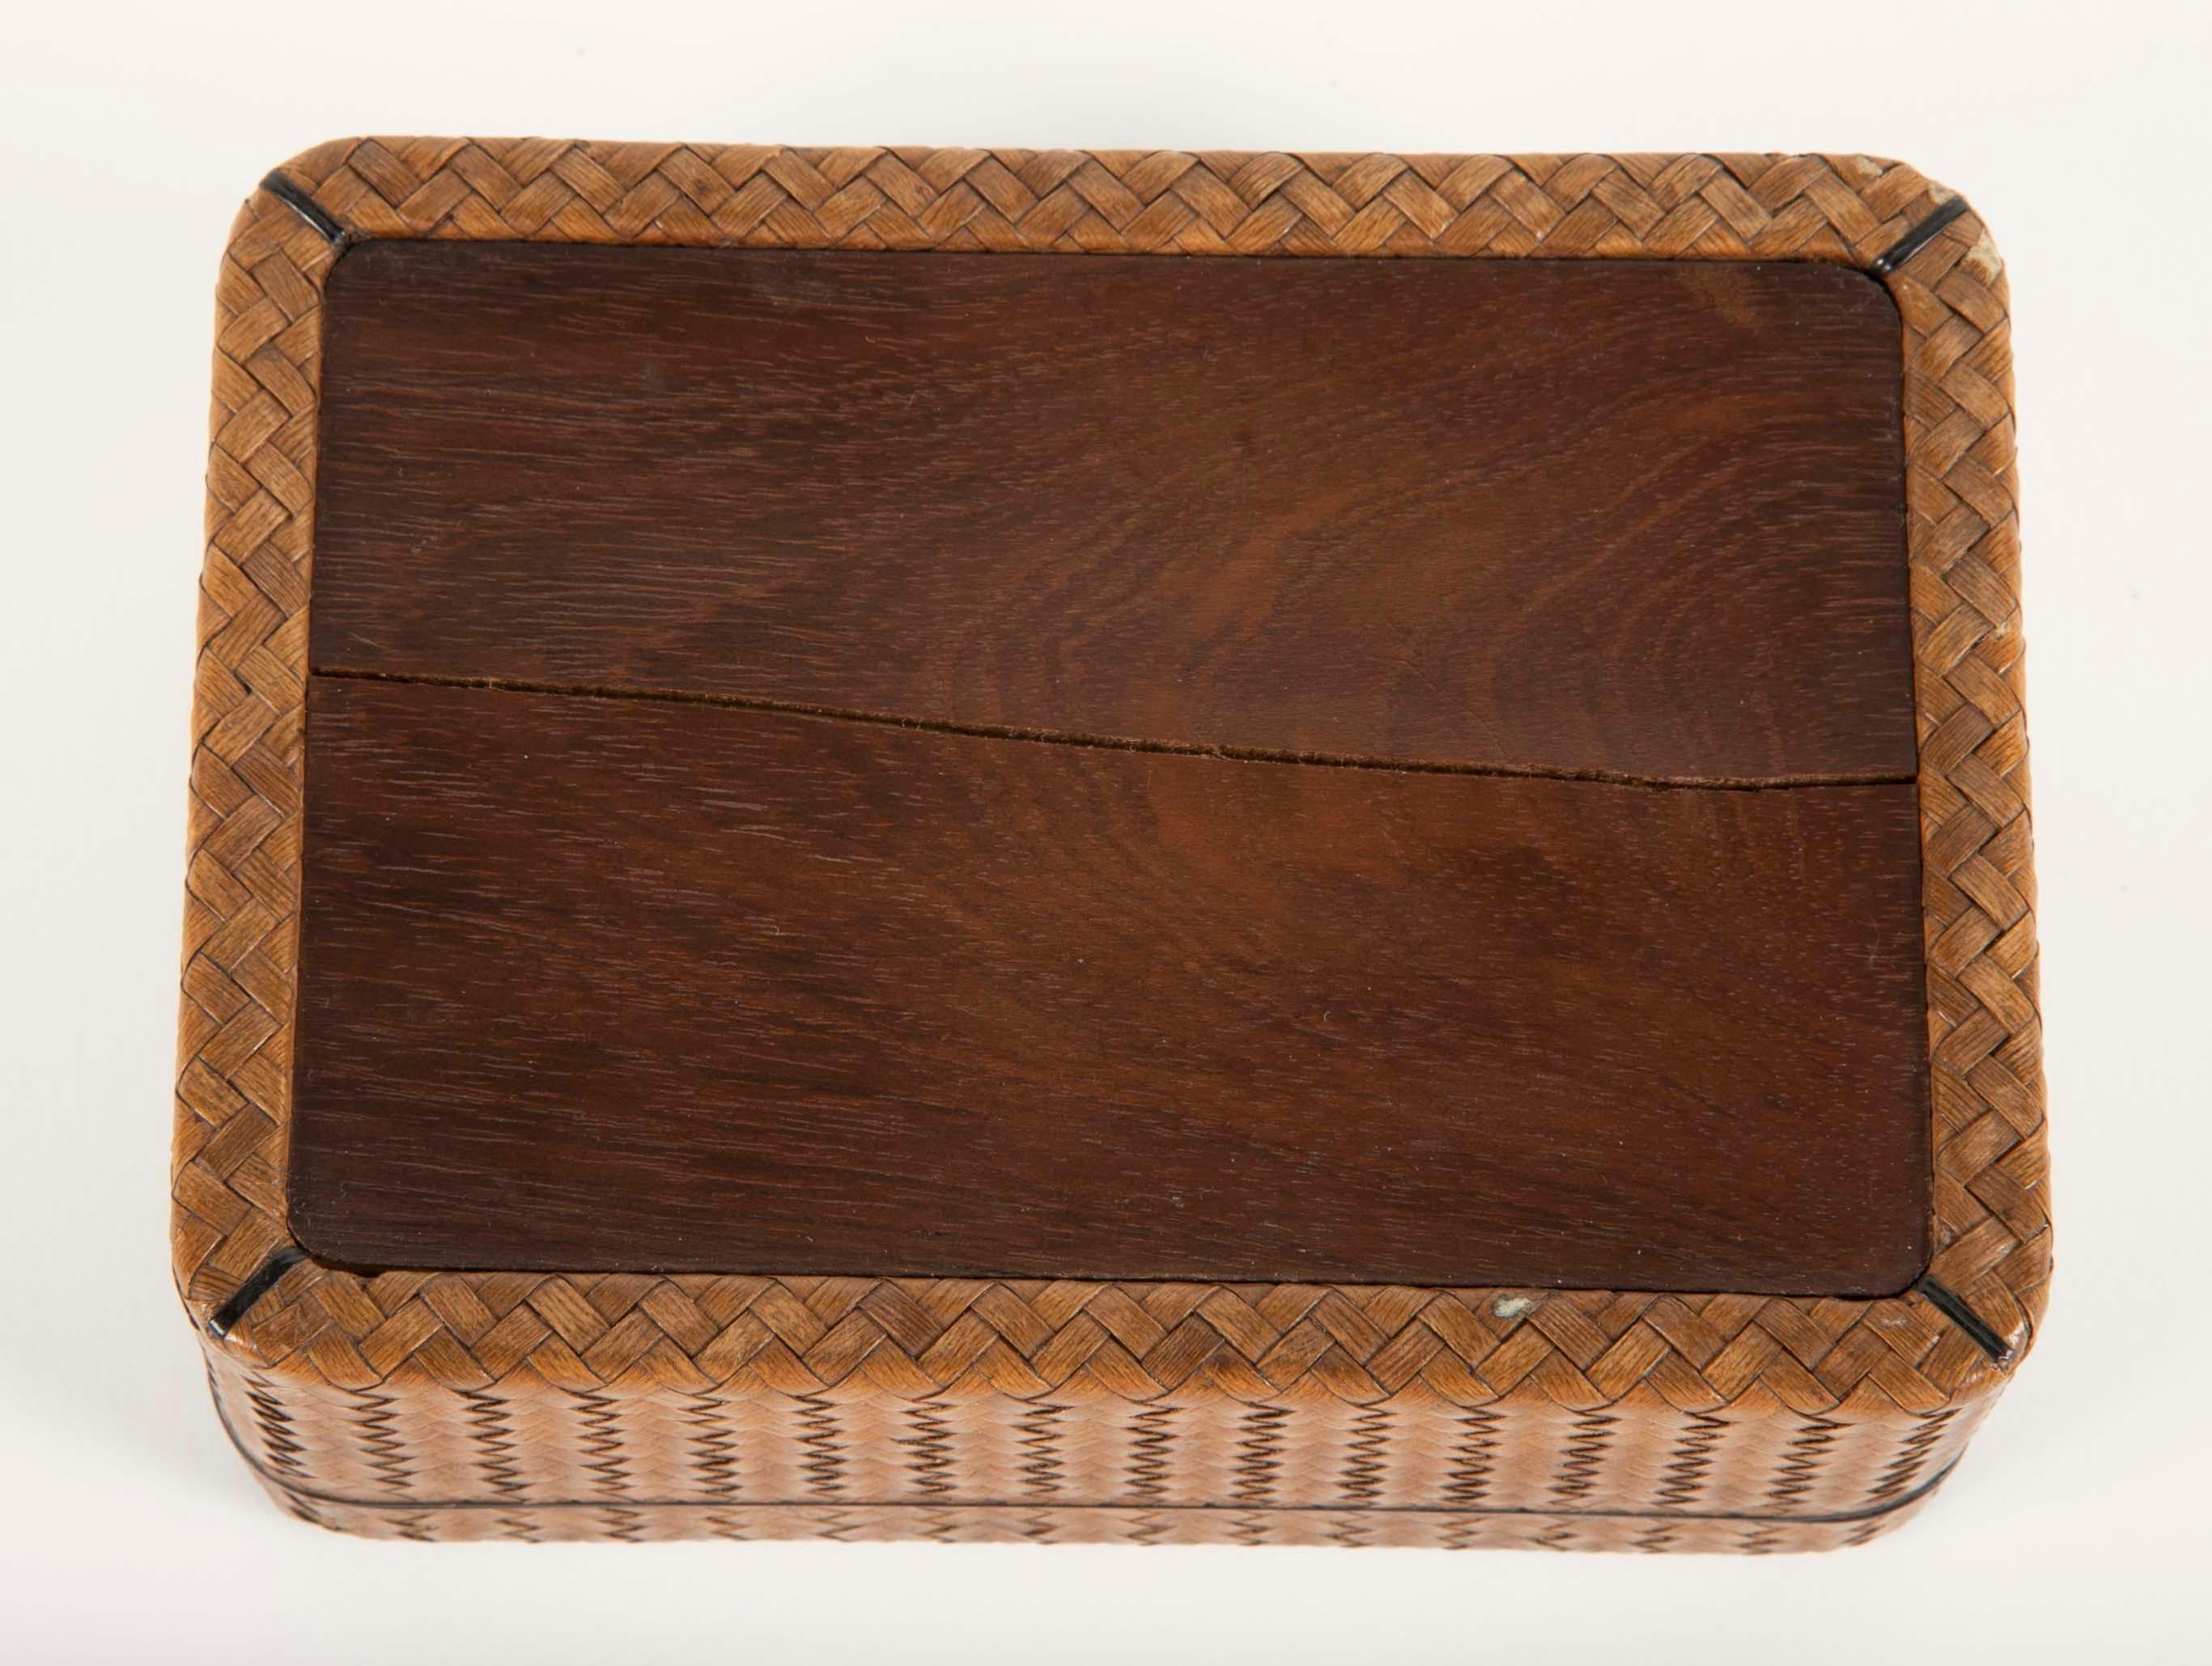 Japanese Meiji Period Box of Woven Cane, Lacquer, Silver & Copper 5